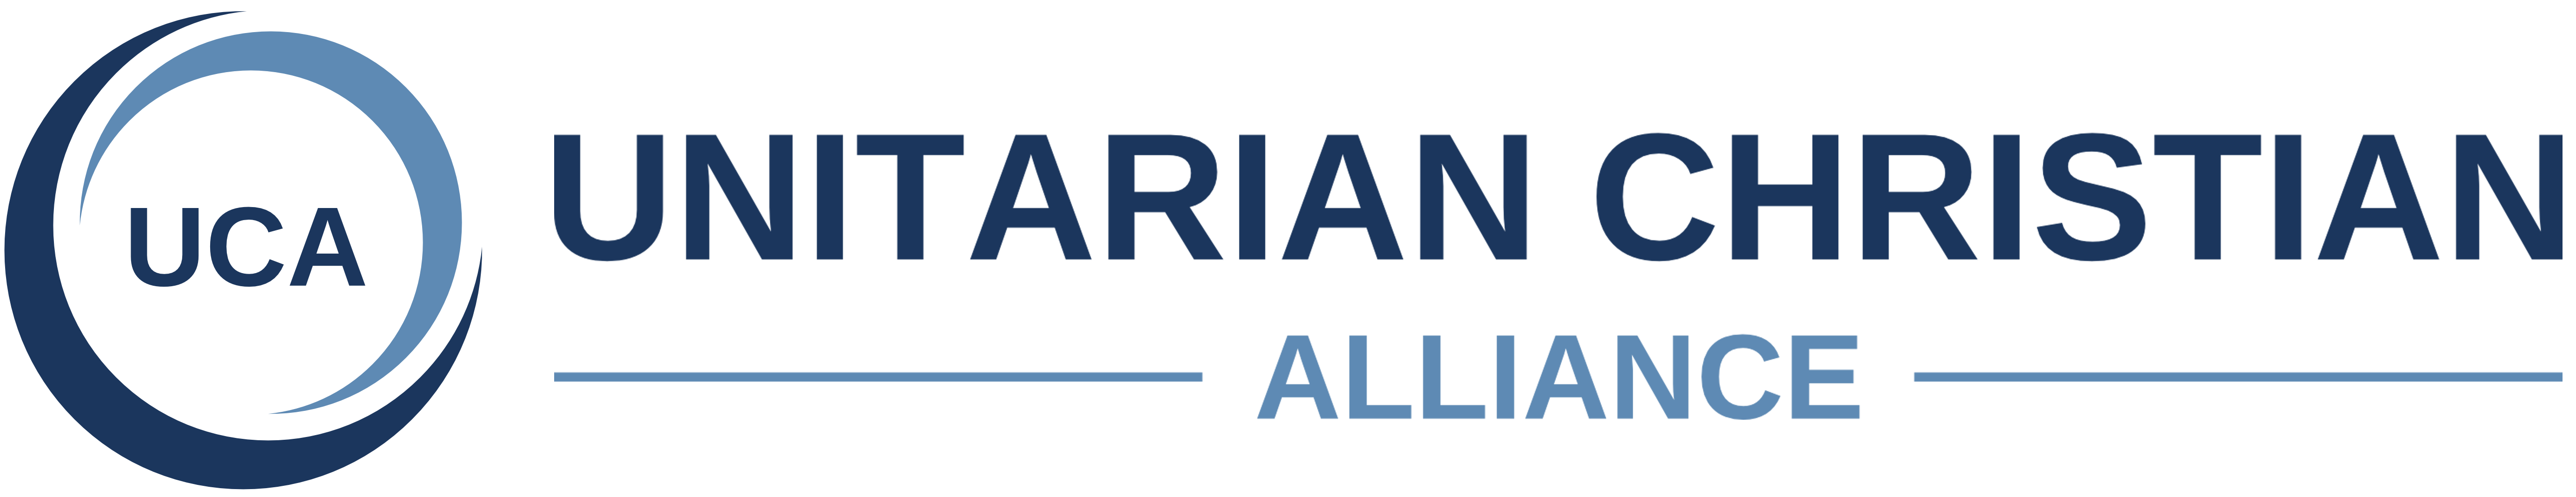 Unitarian Christian Alliance